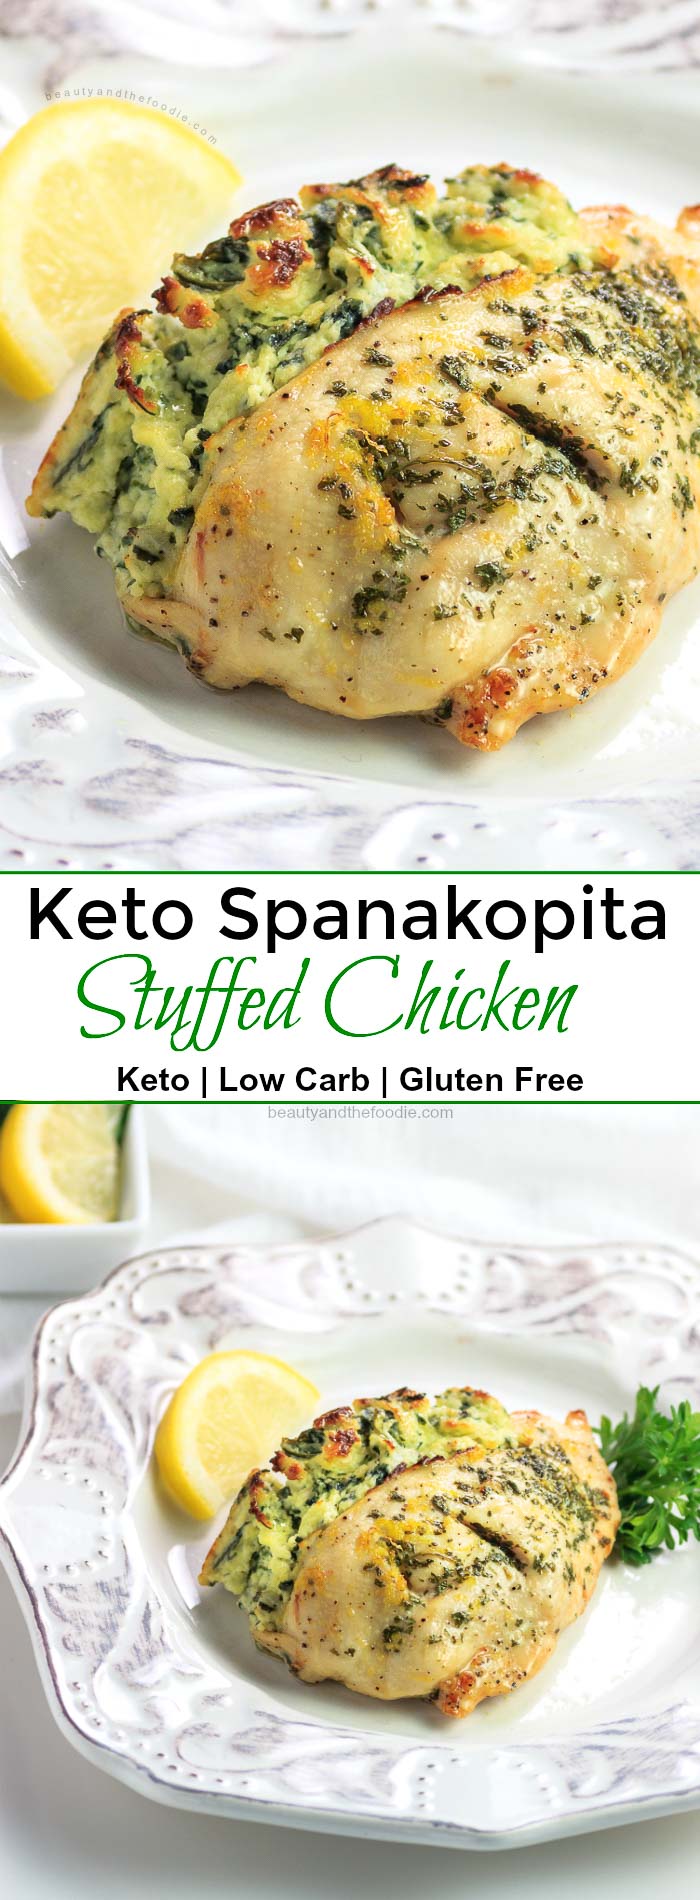 Keto Spanakopita Stuffed Chicken- low carb & gluten free